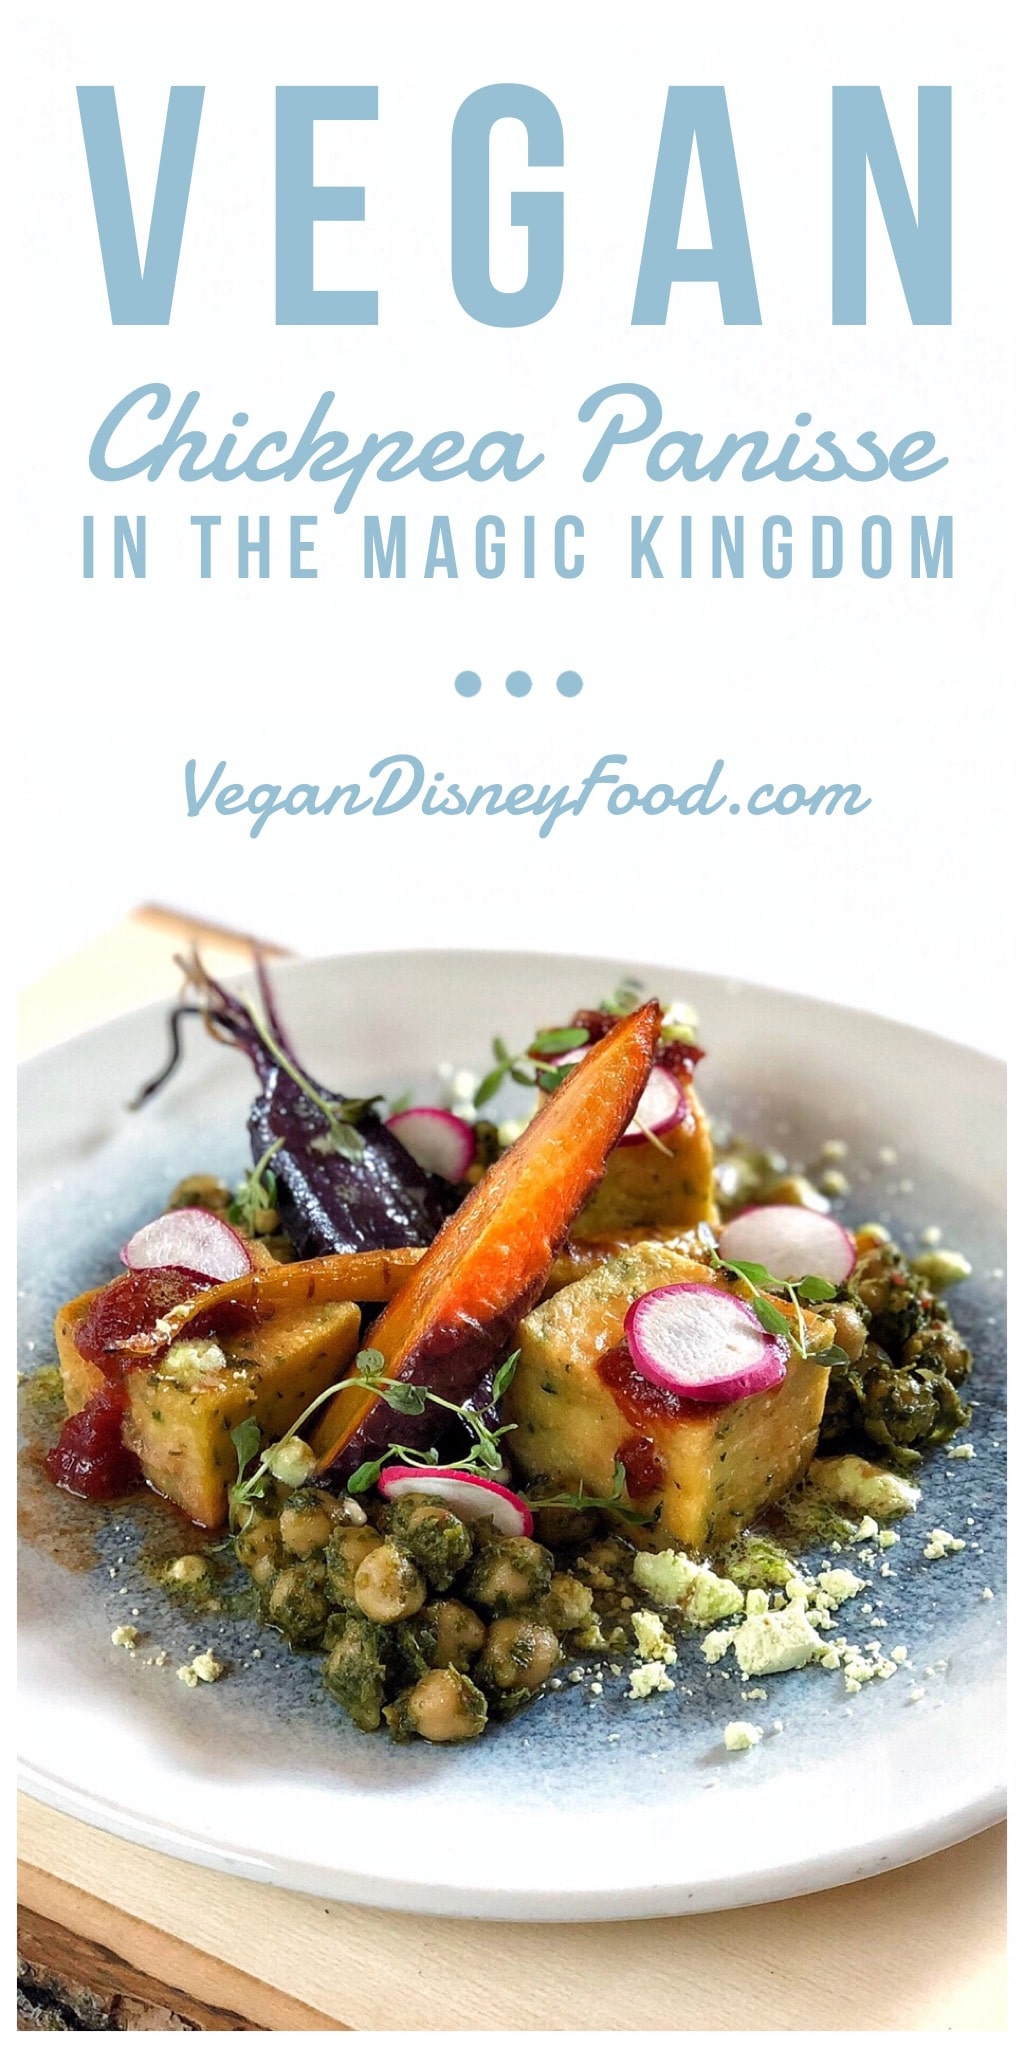 Vegan Chickpea Panisse at Cinderella’s Royal Table in the Magic Kingdom at Walt Disney World